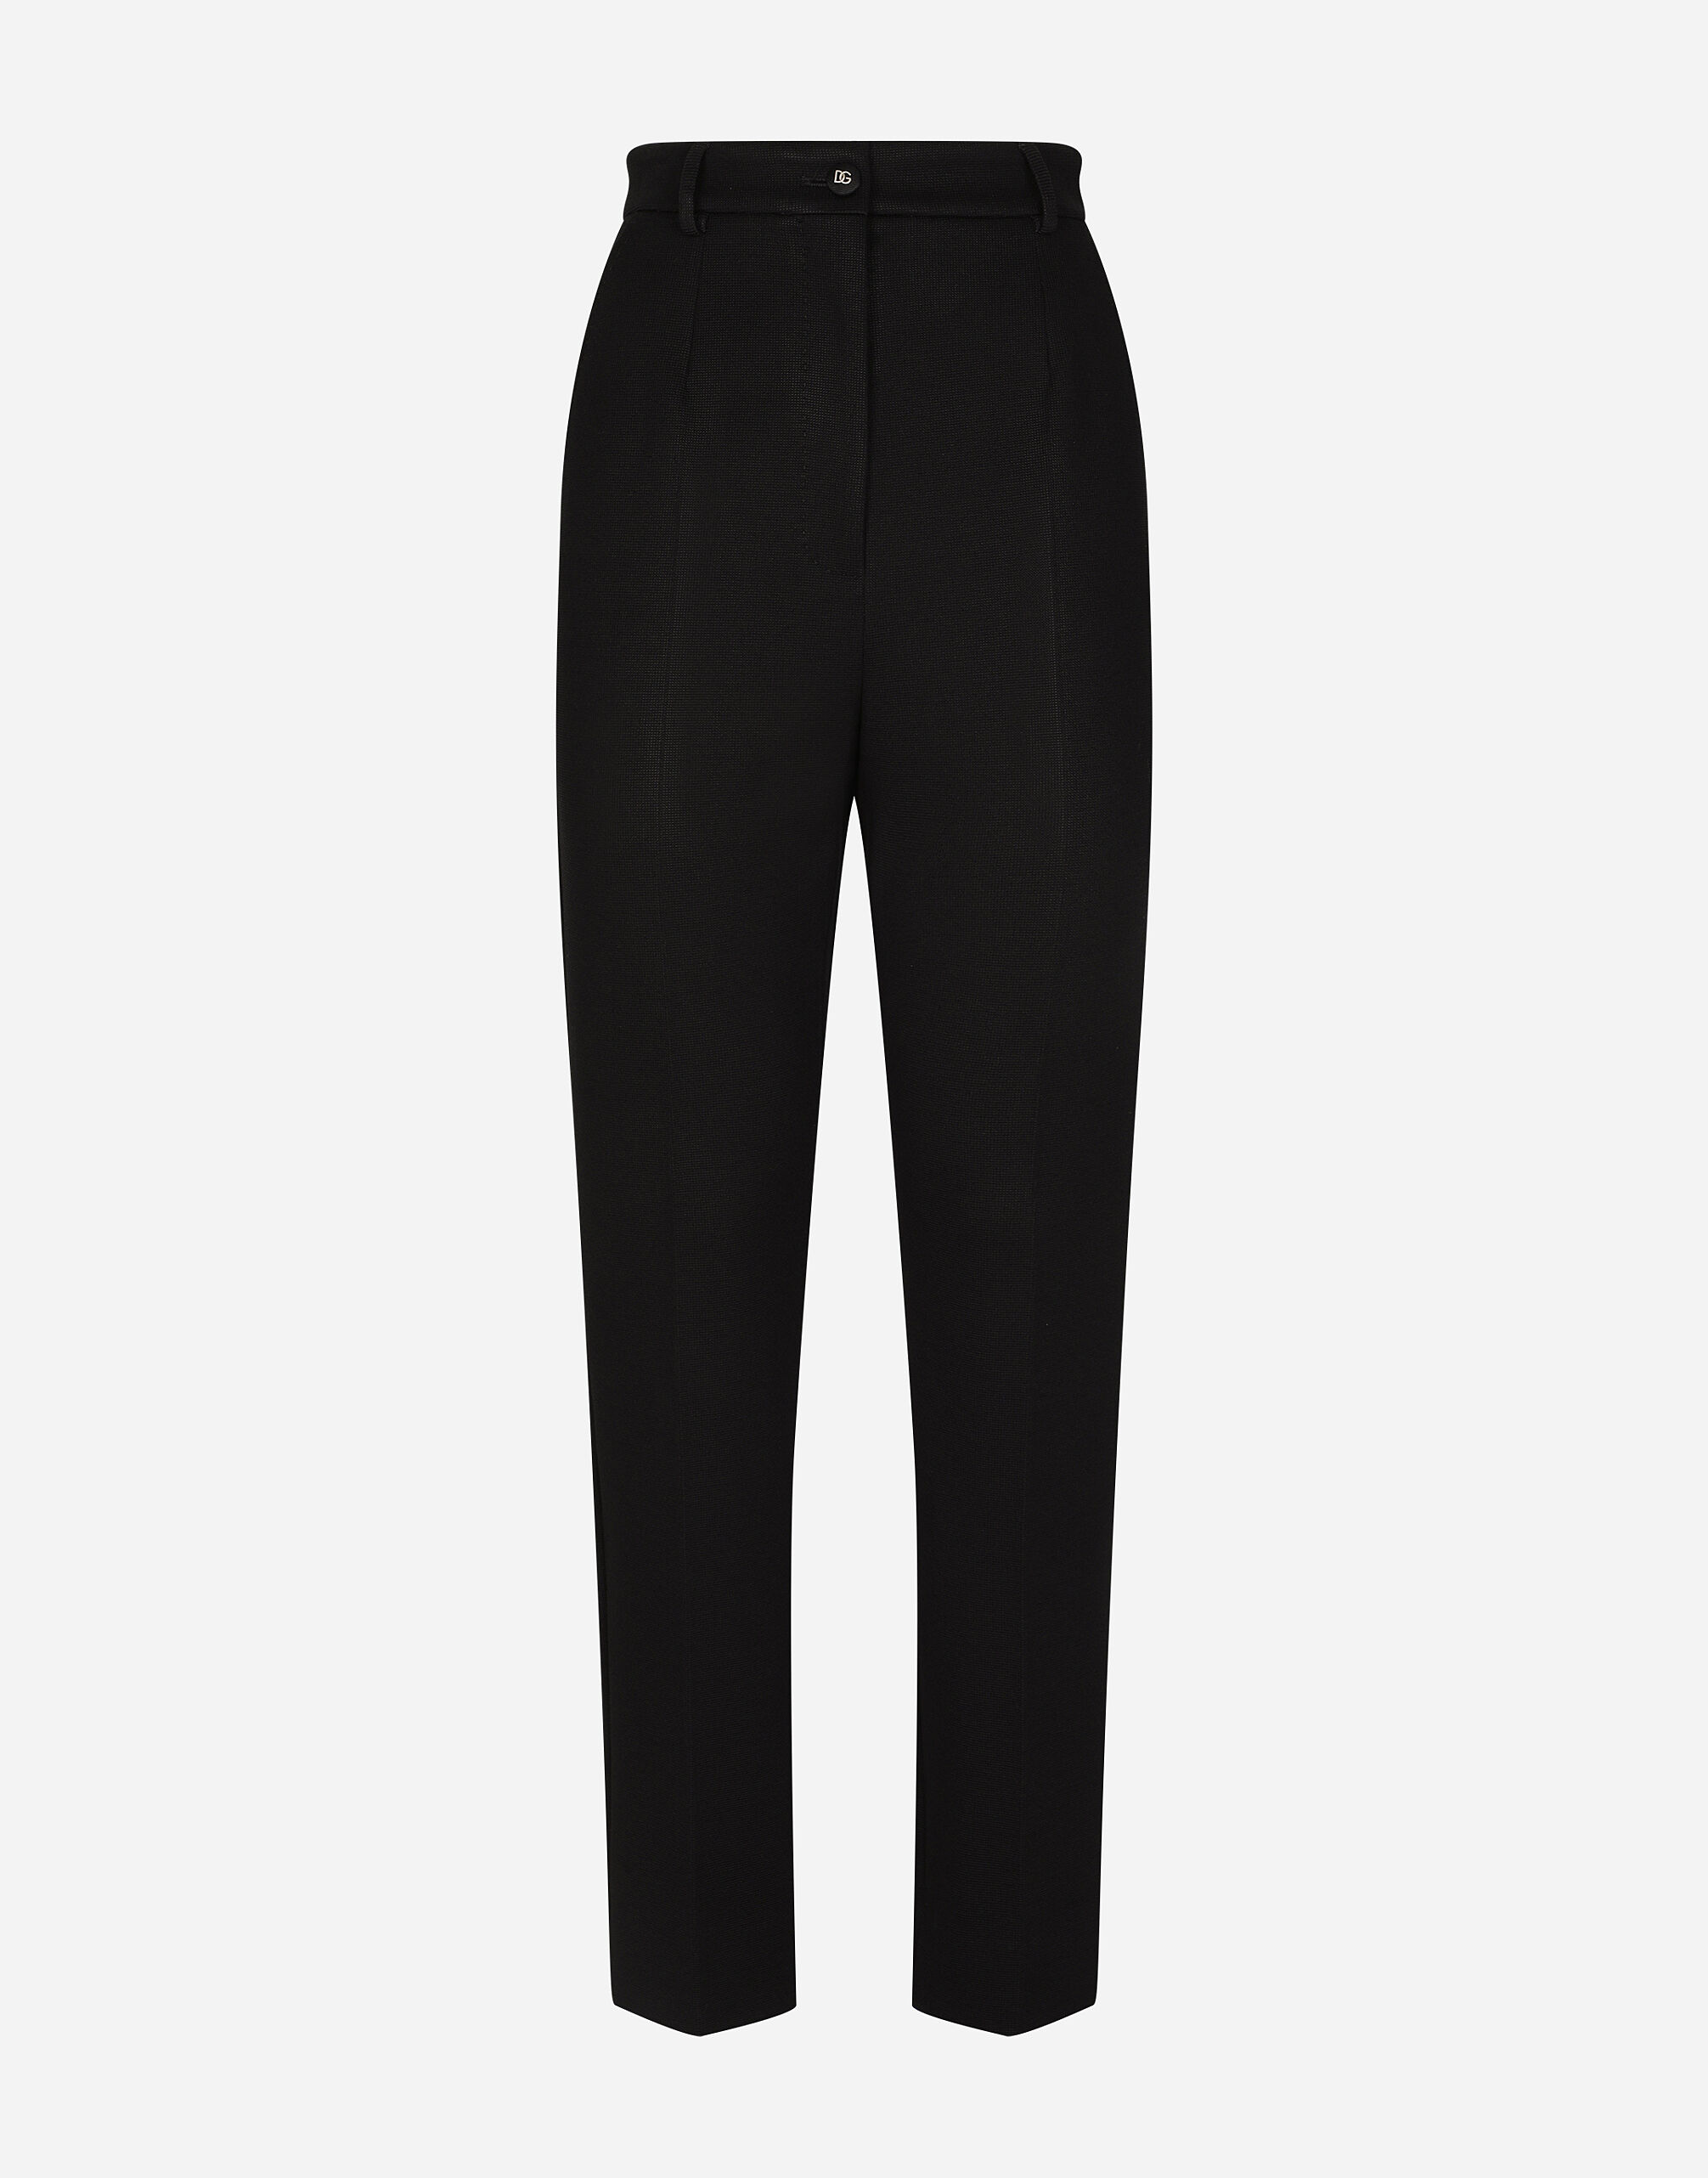 Dolce & Gabbana Milano rib pants Black BB6003A1001